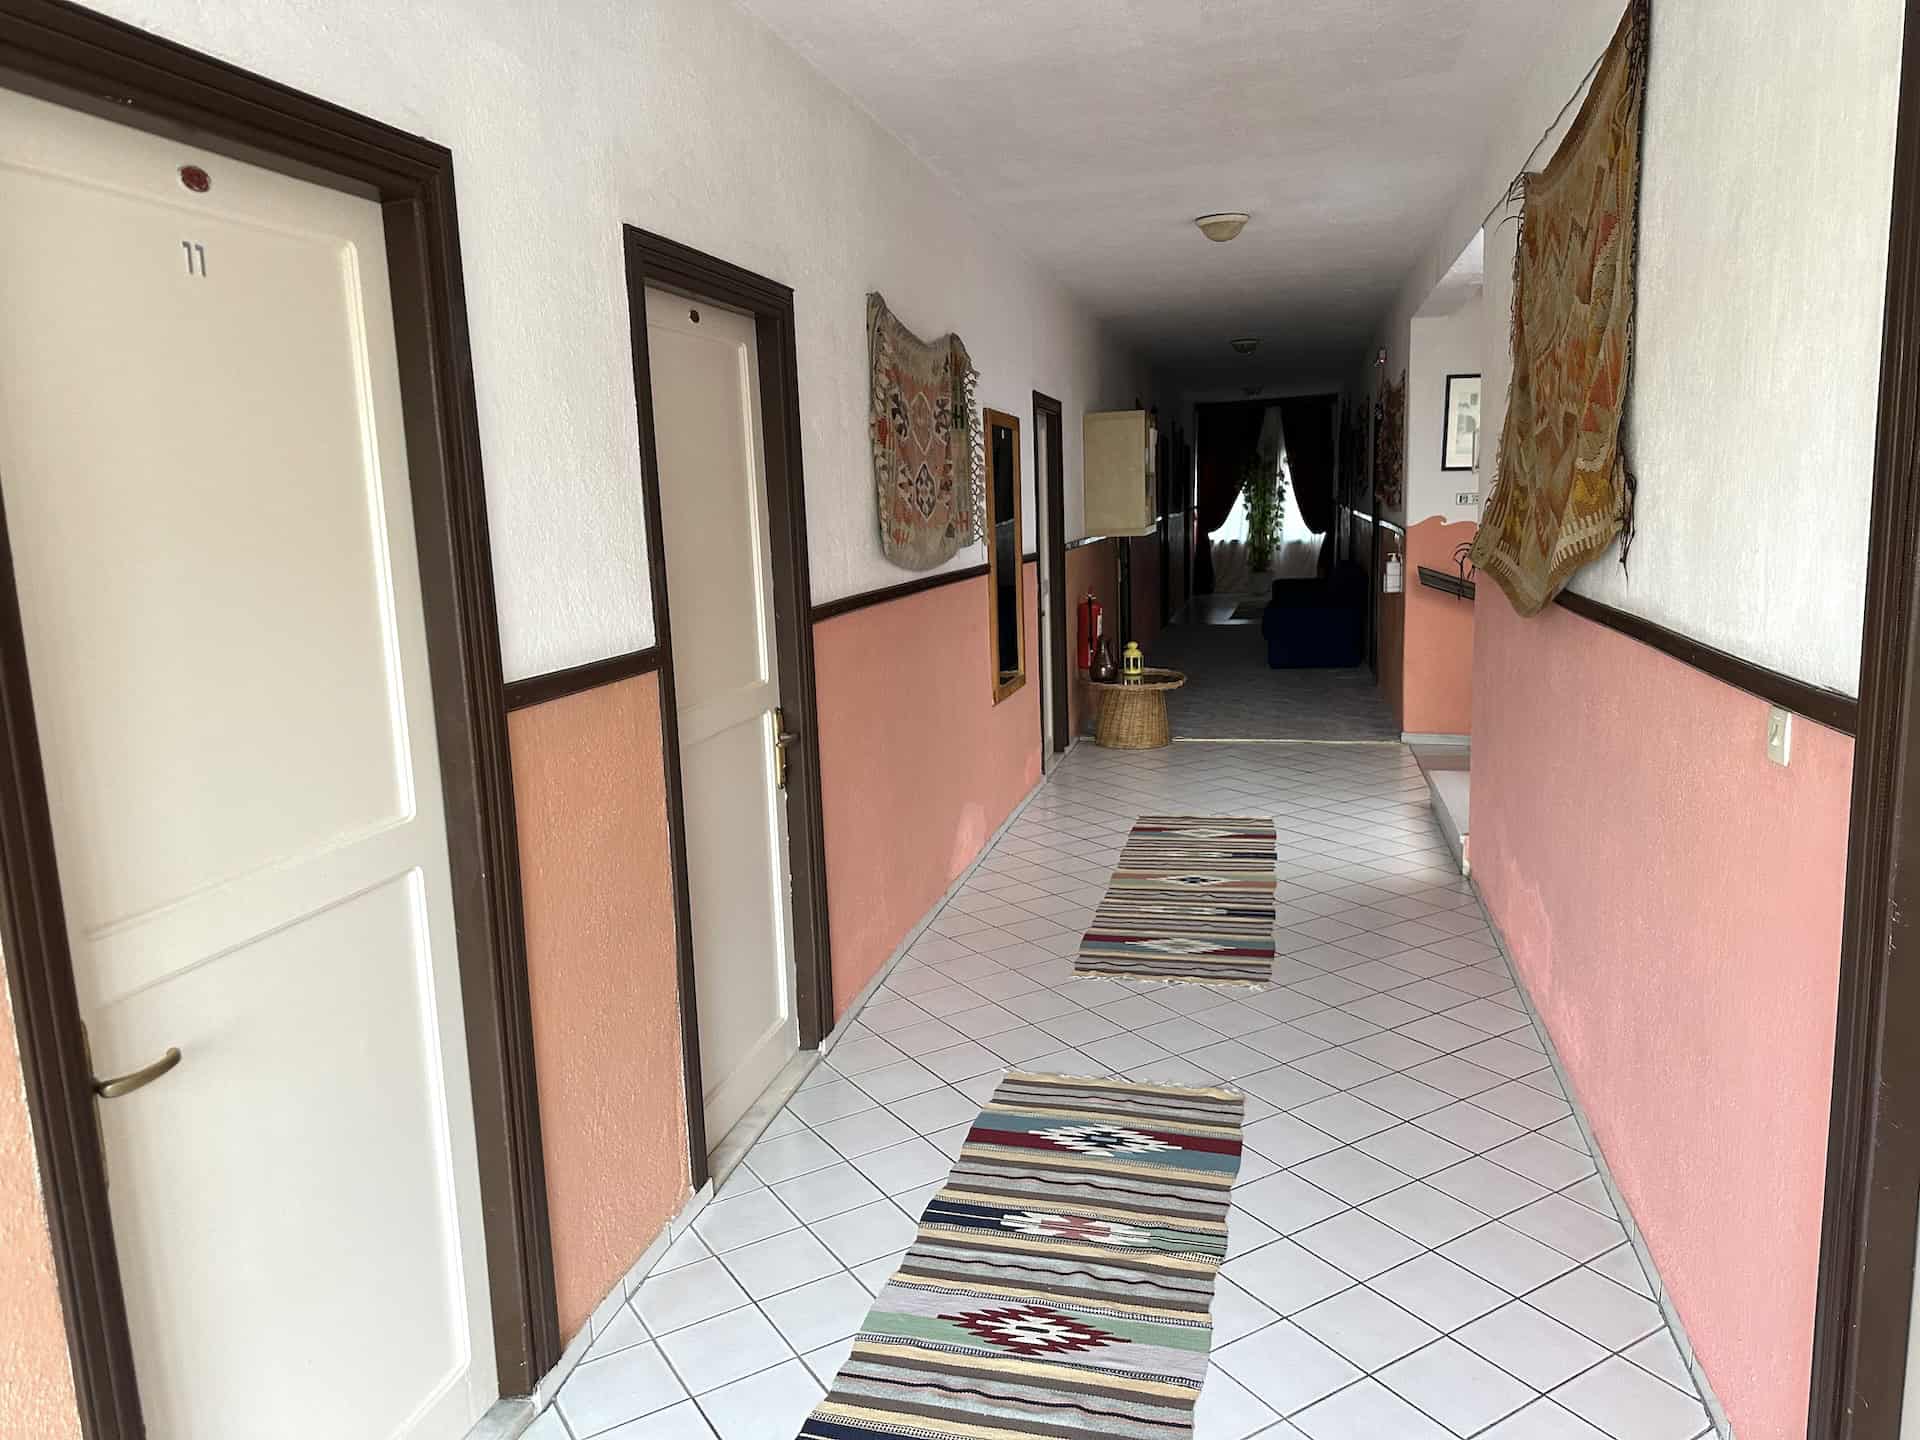 Corridor at Kilim Hotel